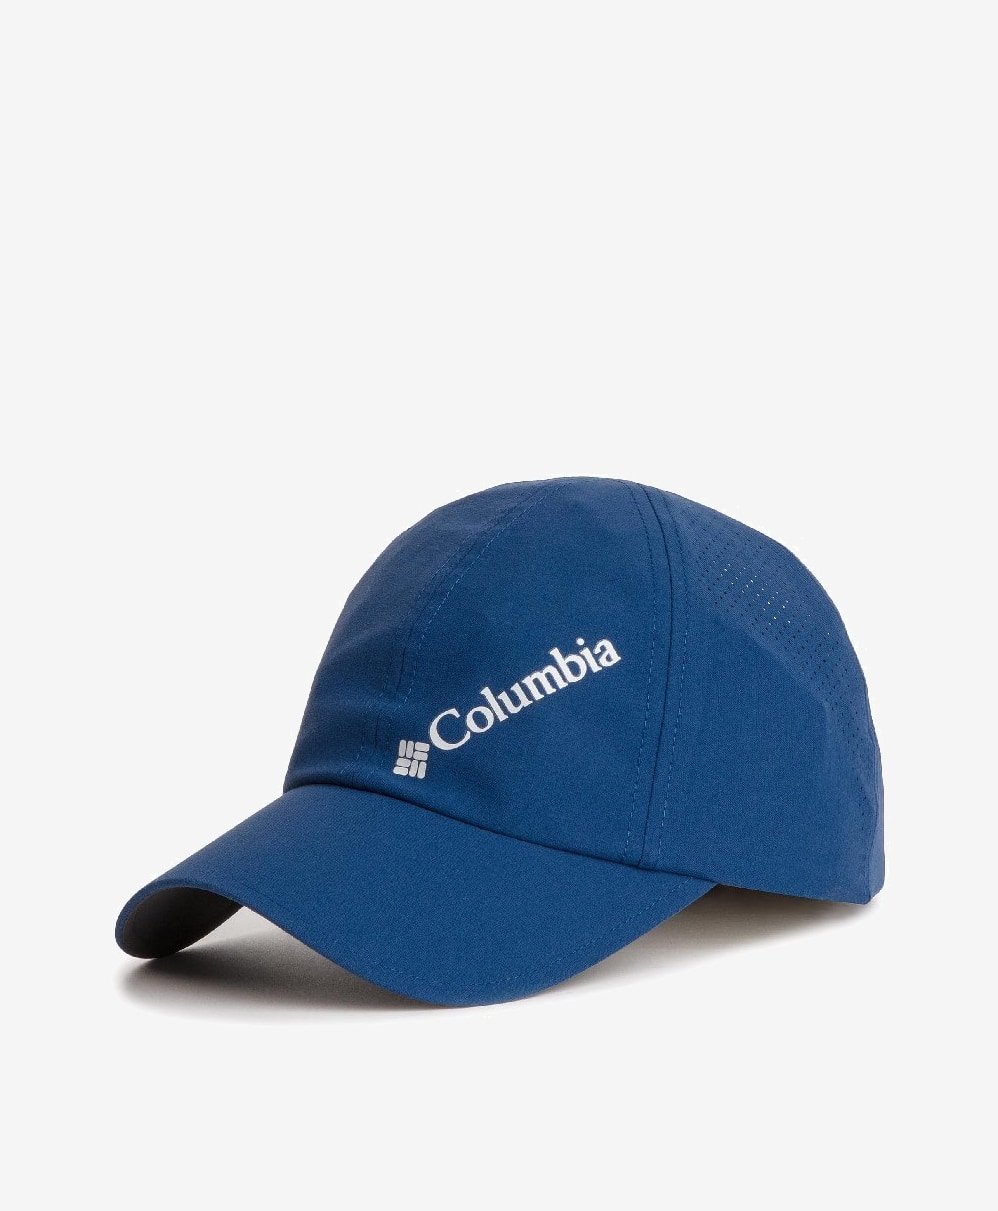 Бейсболка Columbia Tech Shade II Ball cap. Columbia Silver Ridge III Ball cap. Бейсболка Columbia Silver Ridge III Ball cap. Кепка Columbia Athletic Sports Wear. Ball cap